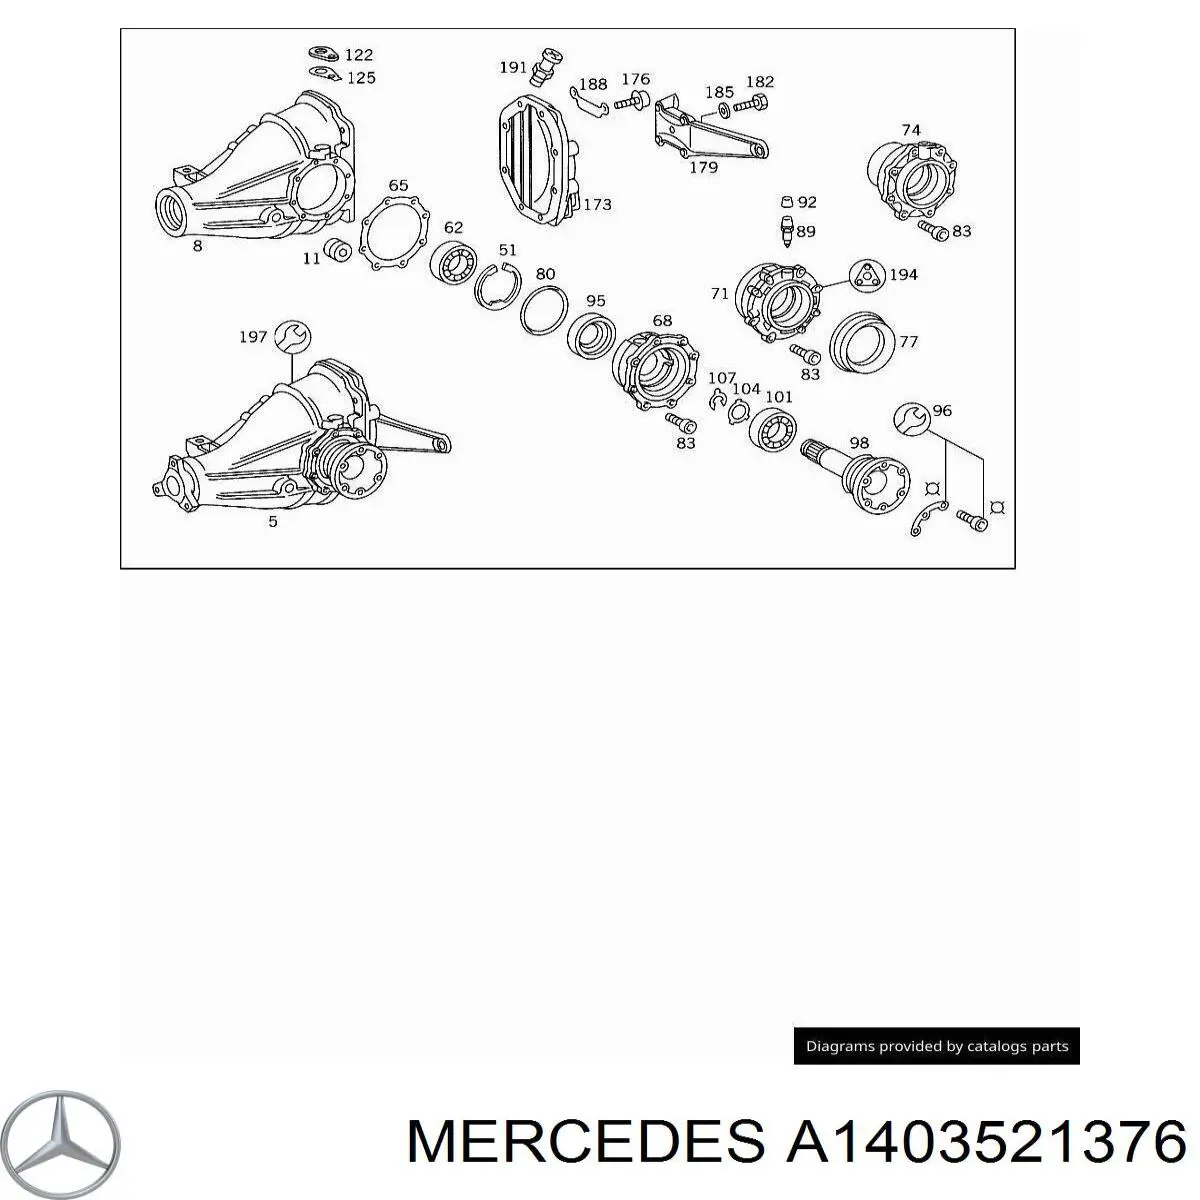 1403521376 Mercedes